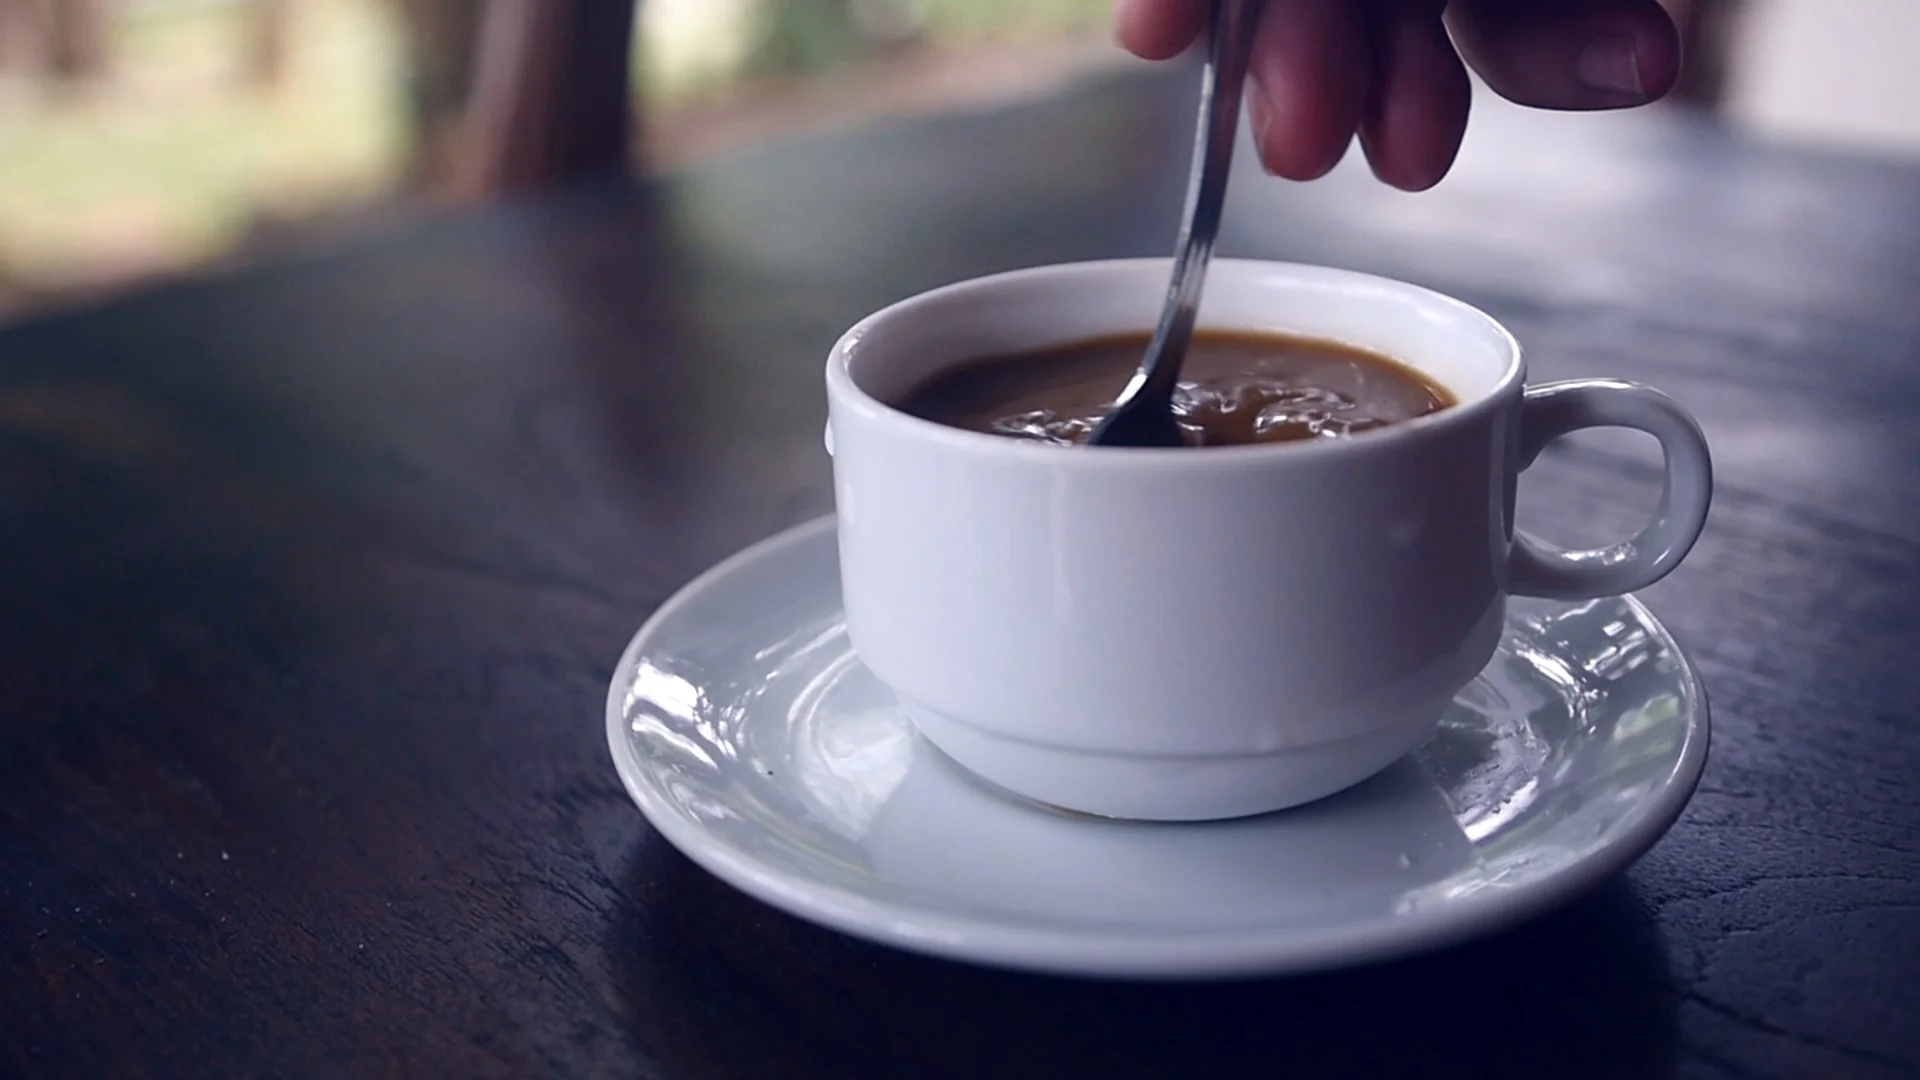 https://images.pond5.com/stir-hot-coffee-cup-spoon-footage-087163832_prevstill.jpeg